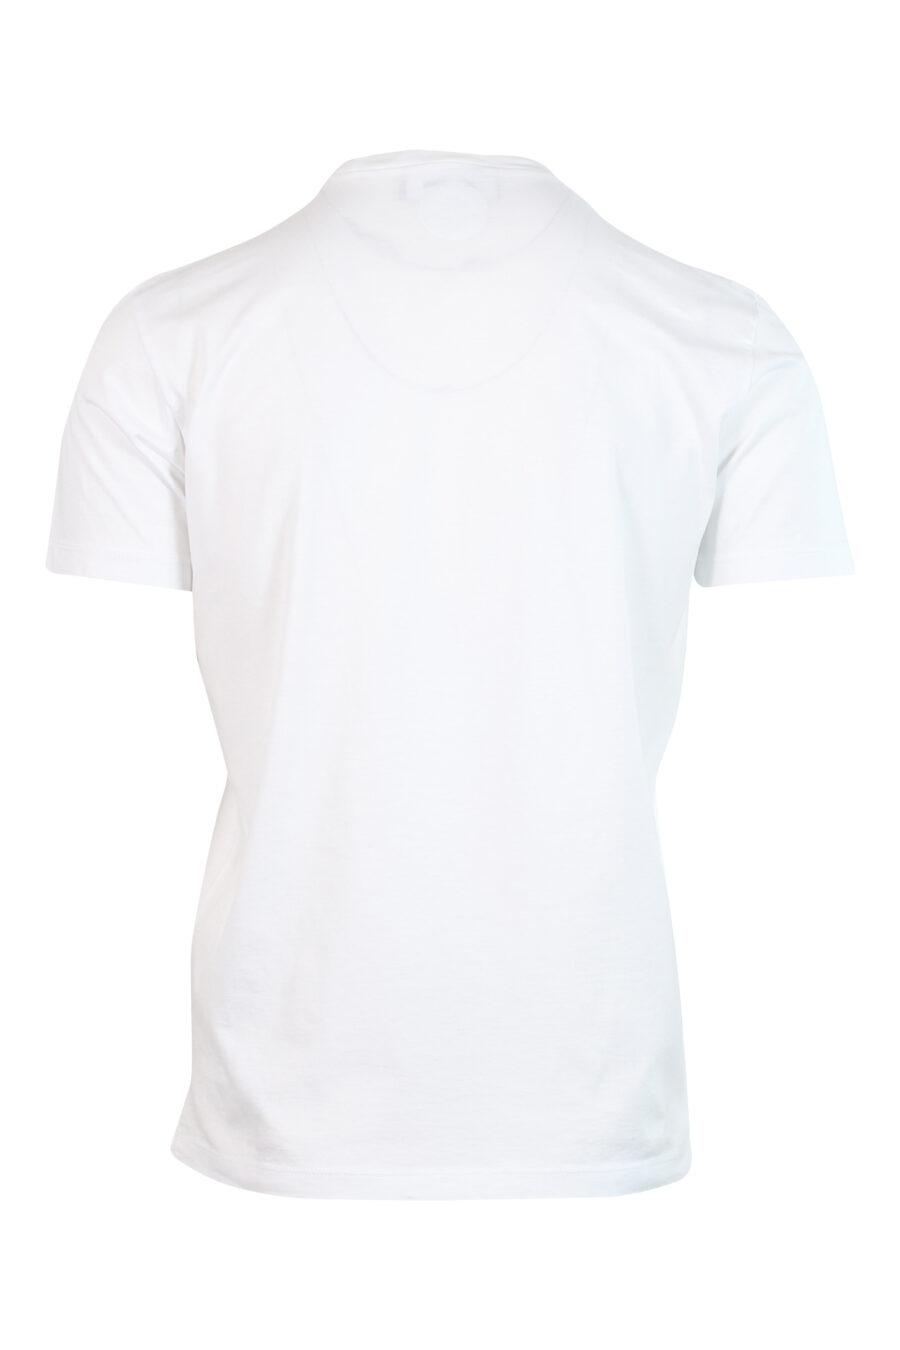 T-shirt blanc avec maxilogo graphic leaf outline - 8052134940945 2